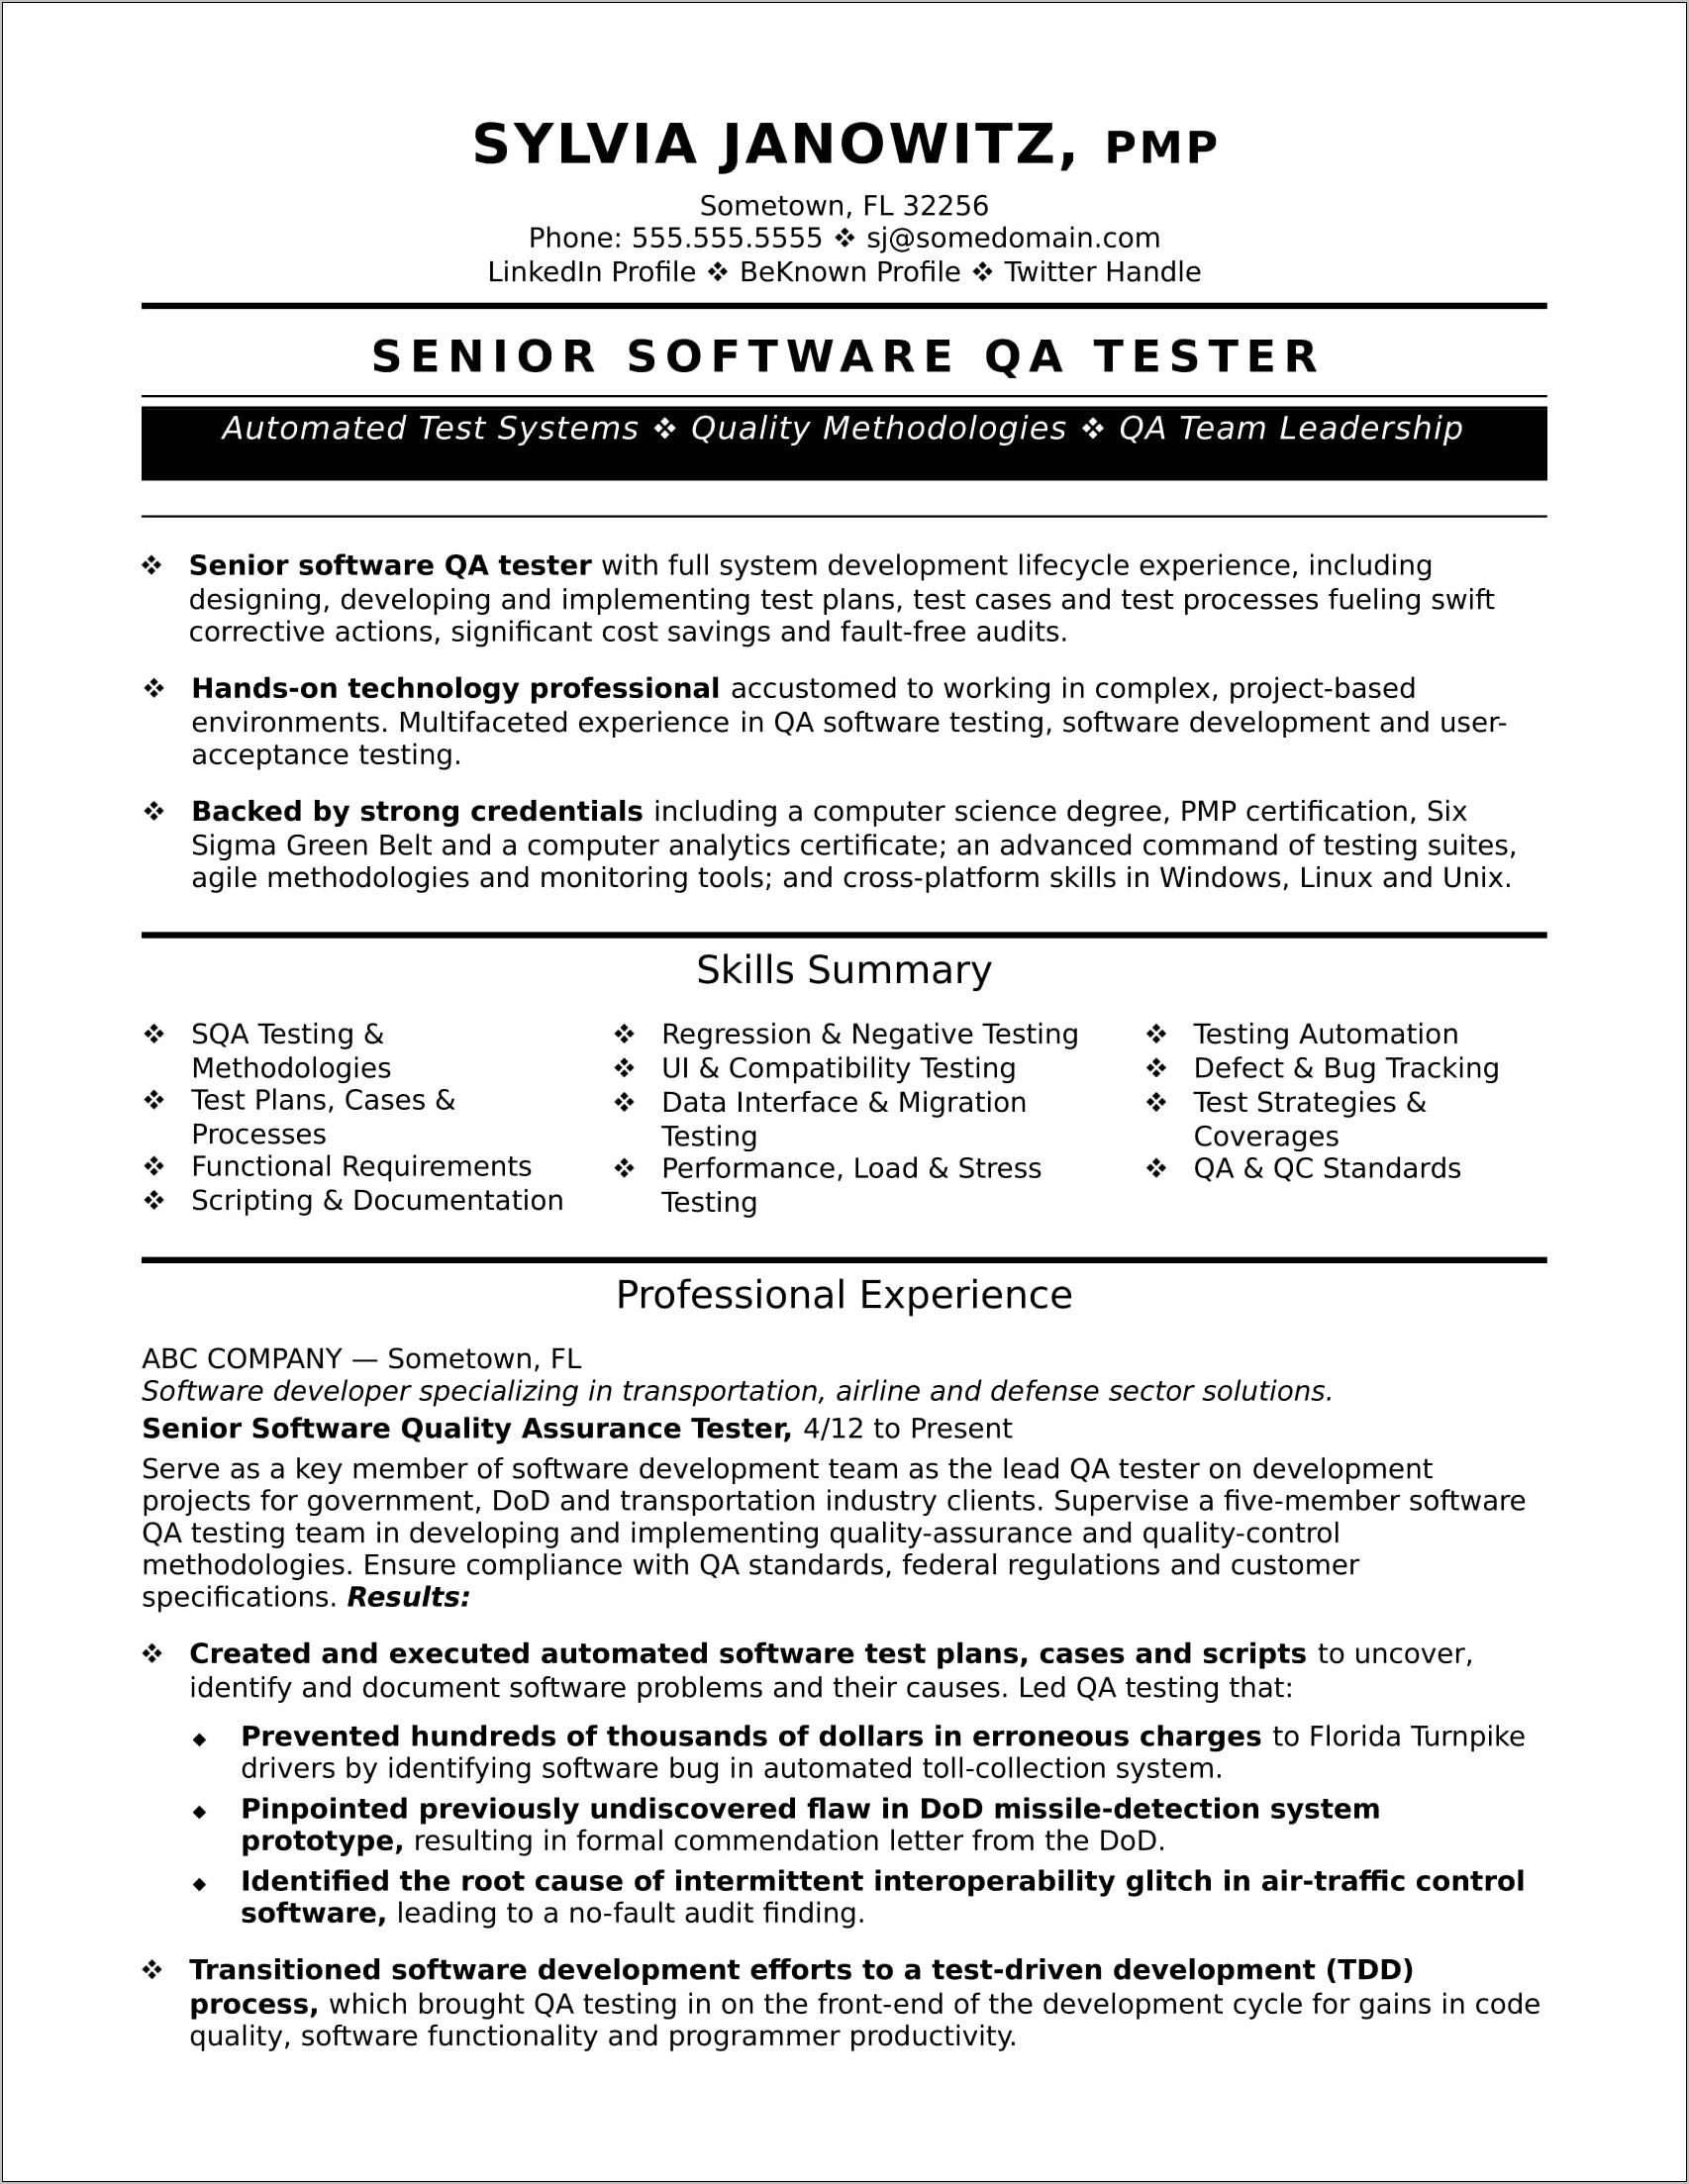 Software Development Team Lead Resume Job Description